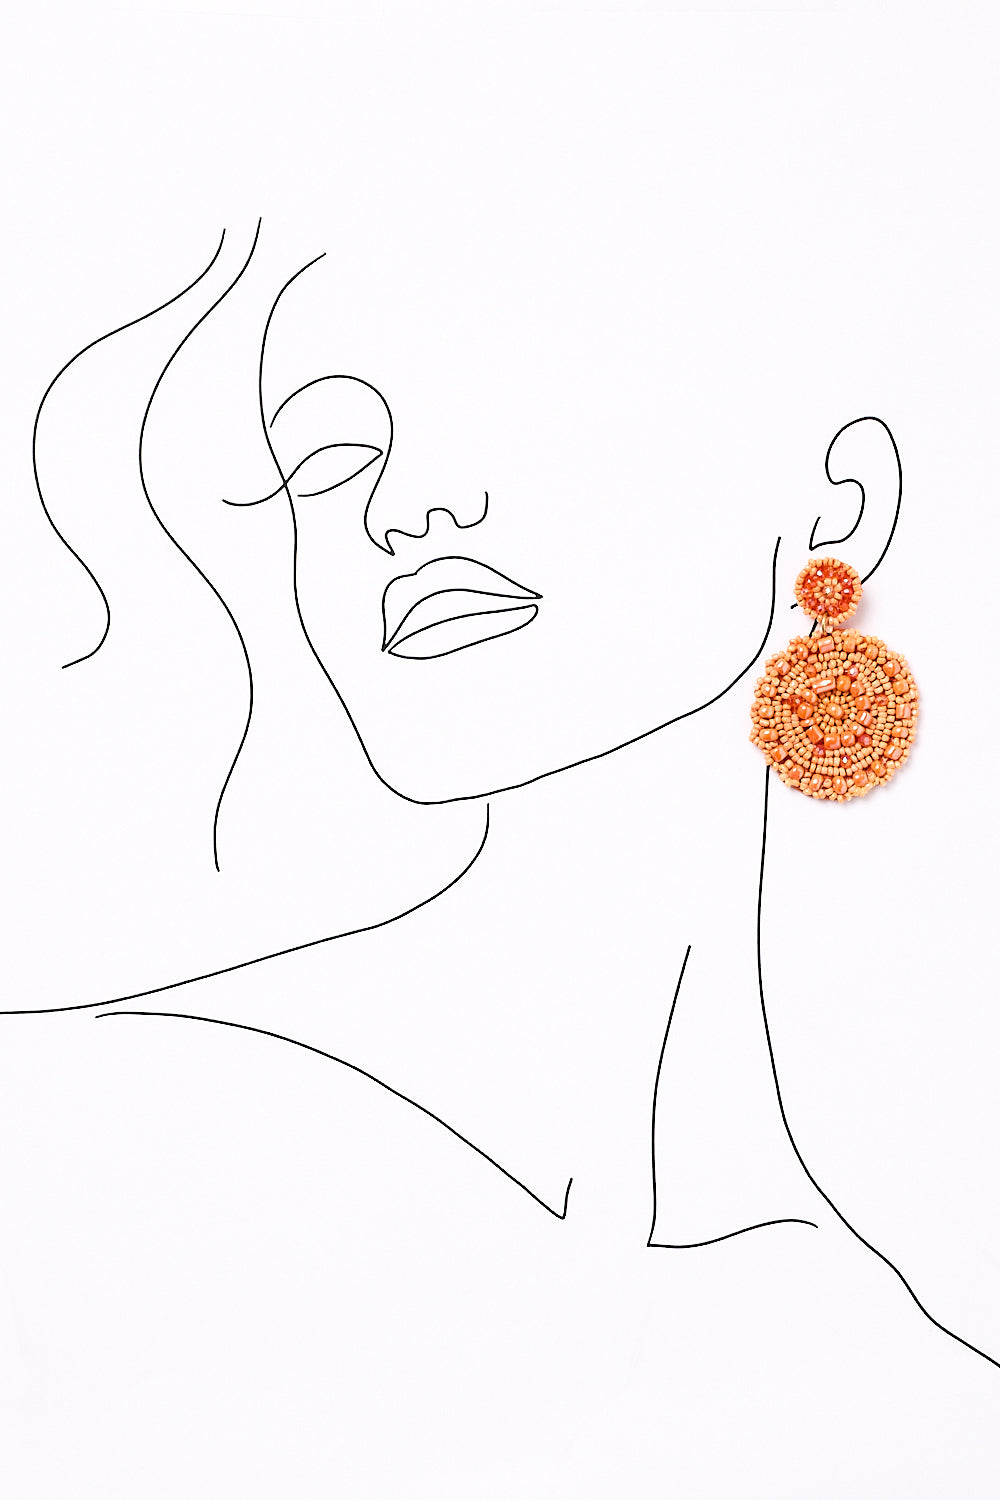 Boho Beaded Earrings in Orange